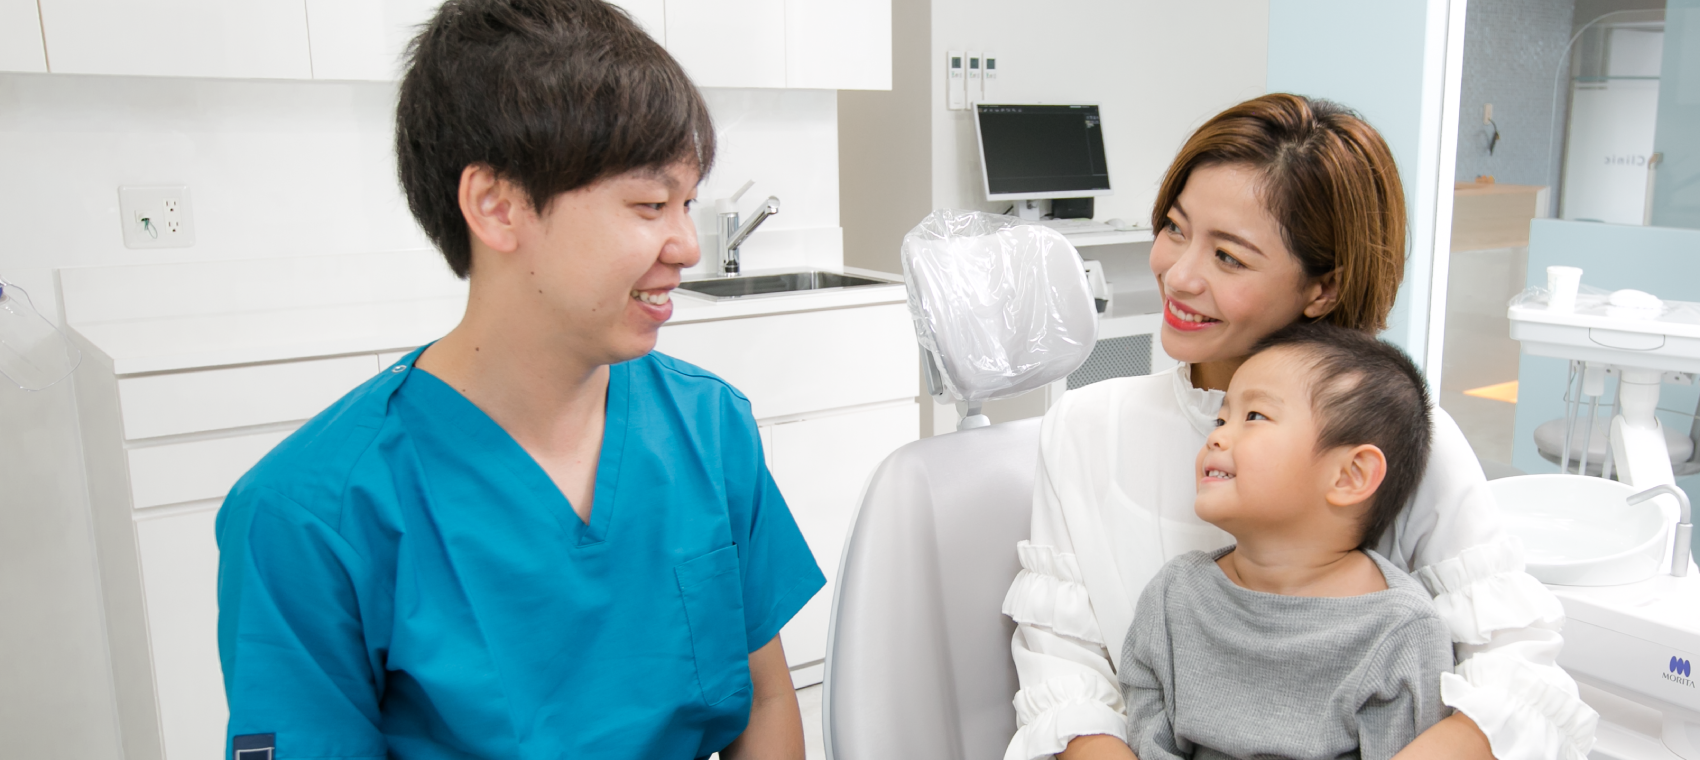 Iroha Dental Clinic おとなとこどもの歯を守る地域のかかりつけ医